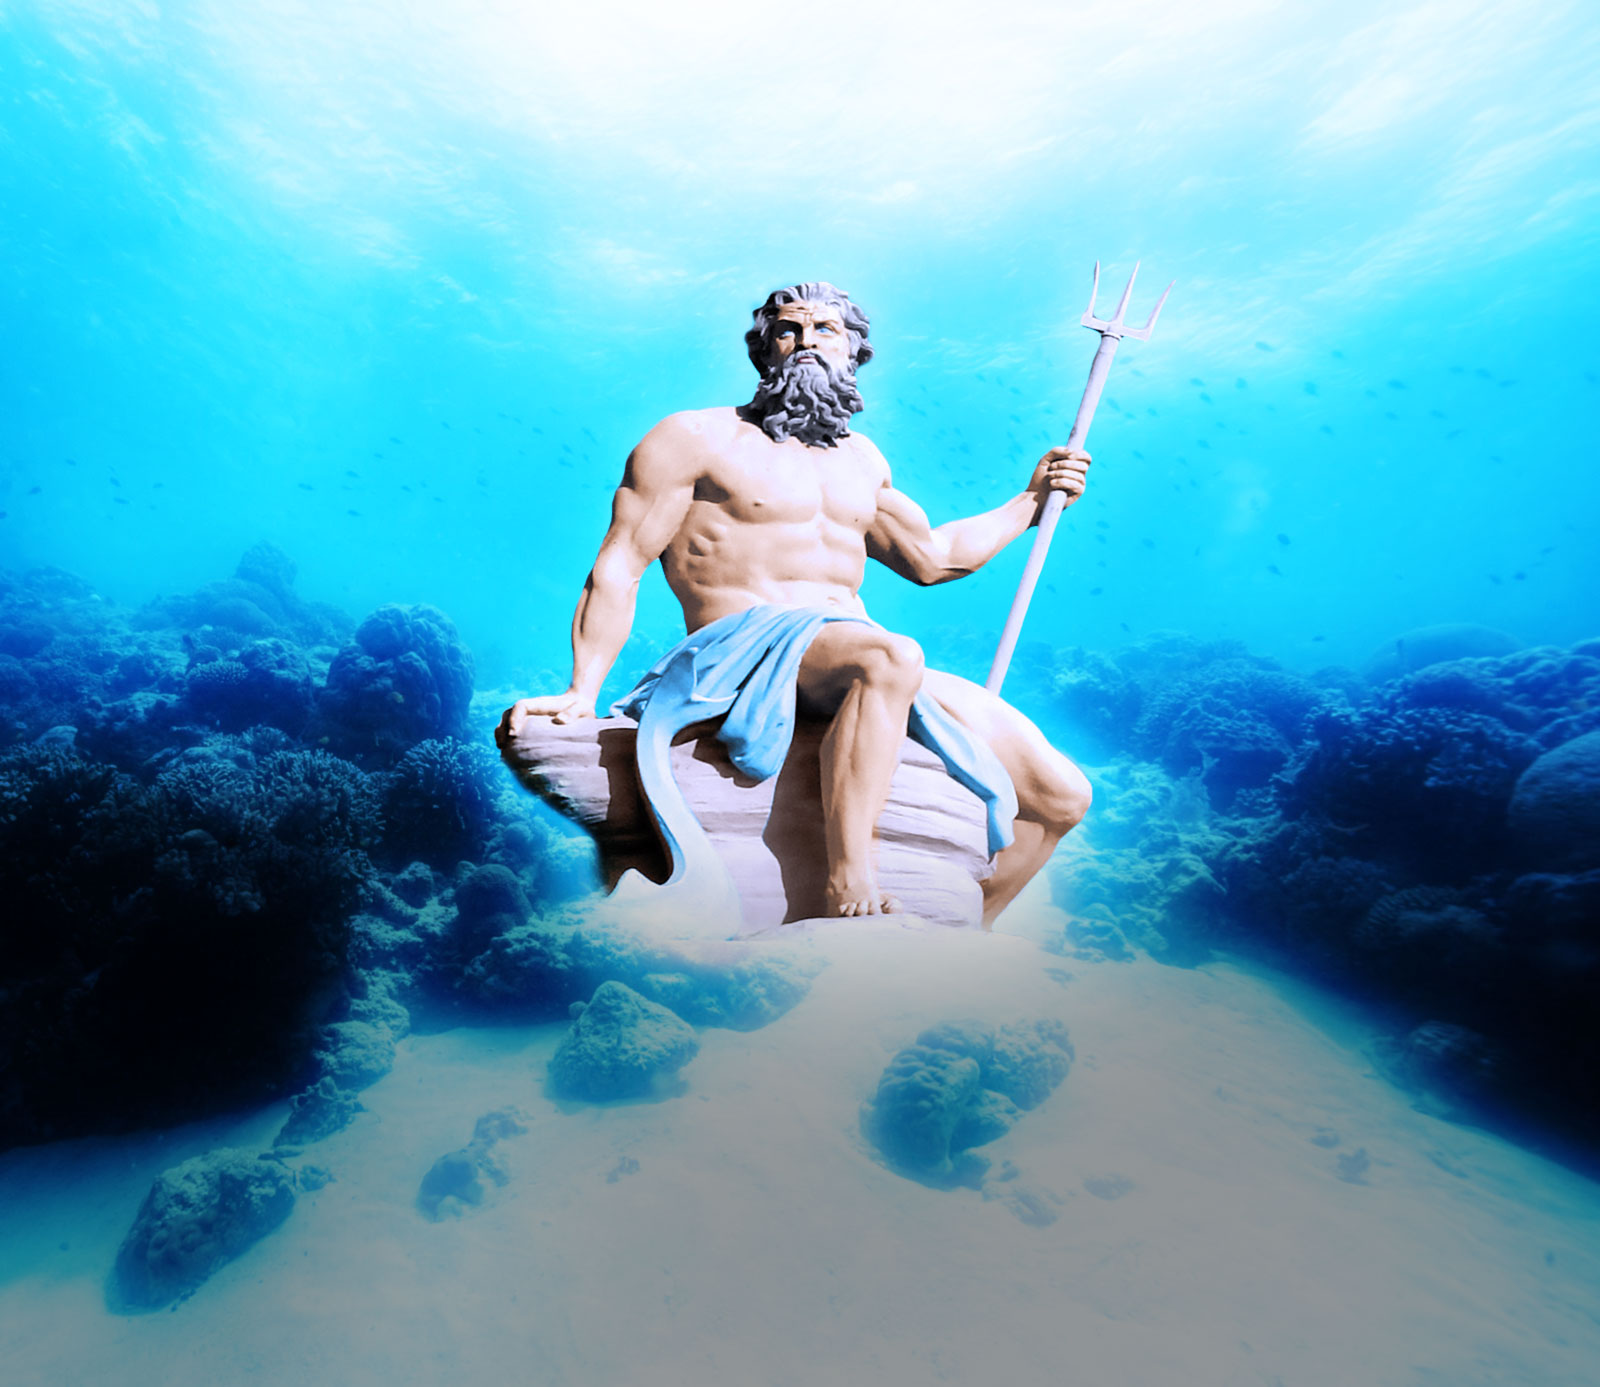 Посейдон г. Посейдон Бог древней Греции. Посейдон Океанович. Нептун Бог морей. Посейдон Океанович Даниэль бой.